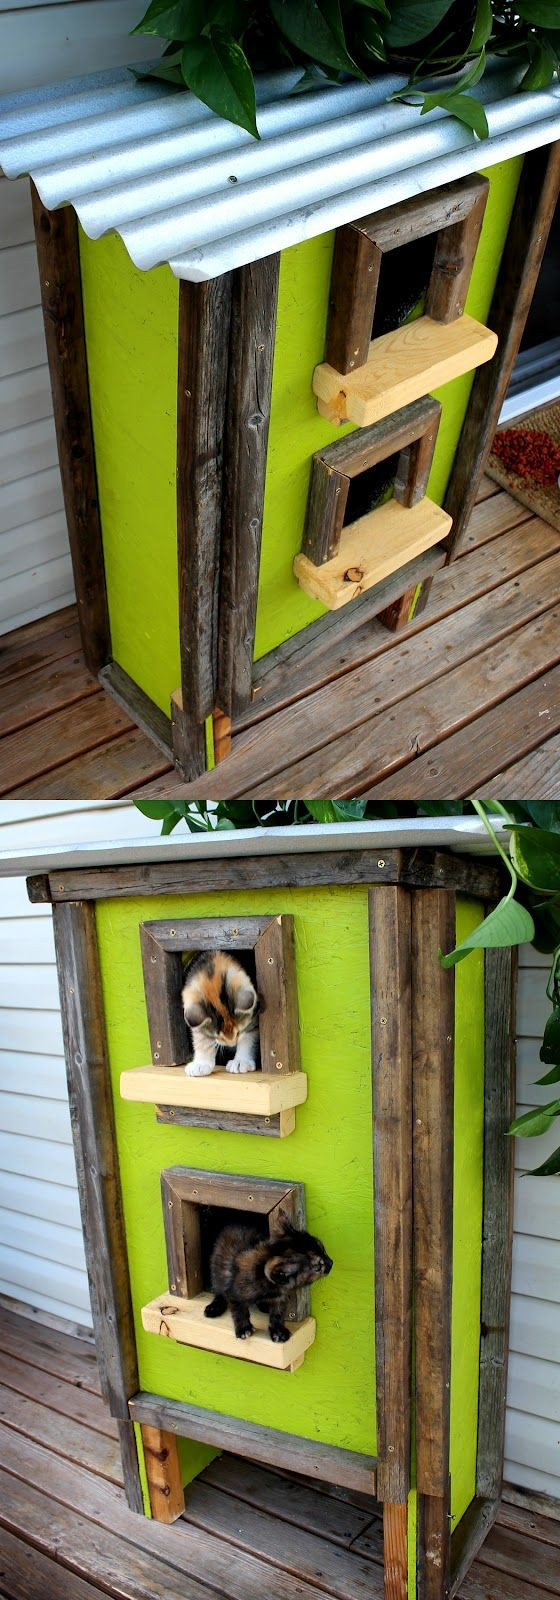 DIY Cat House Outdoor
 Best 25 Cat houses ideas on Pinterest